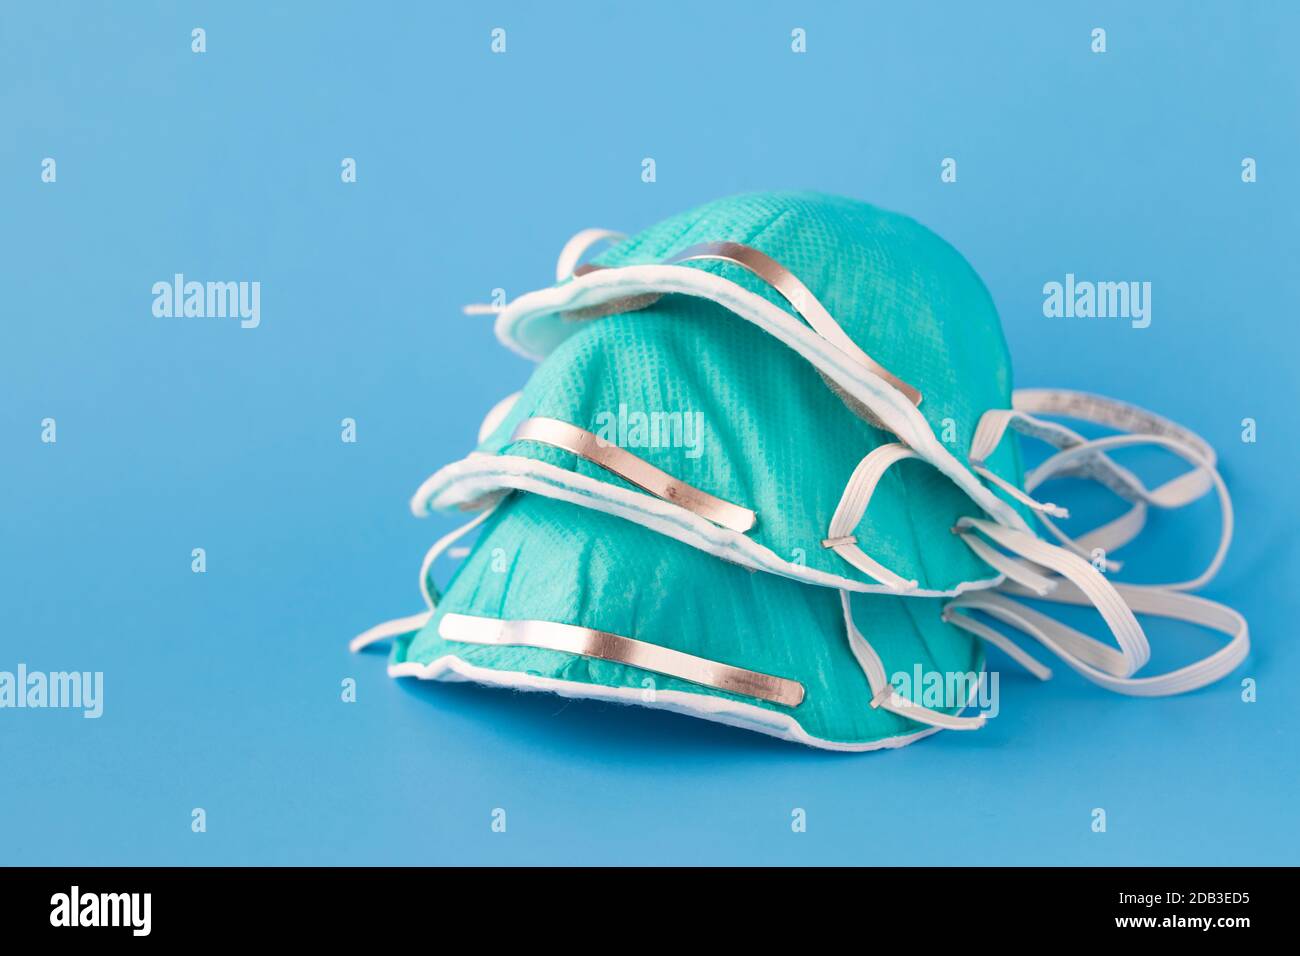 medical mask to protect against flu, virus on blue background, coronavirus concept Stock Photo